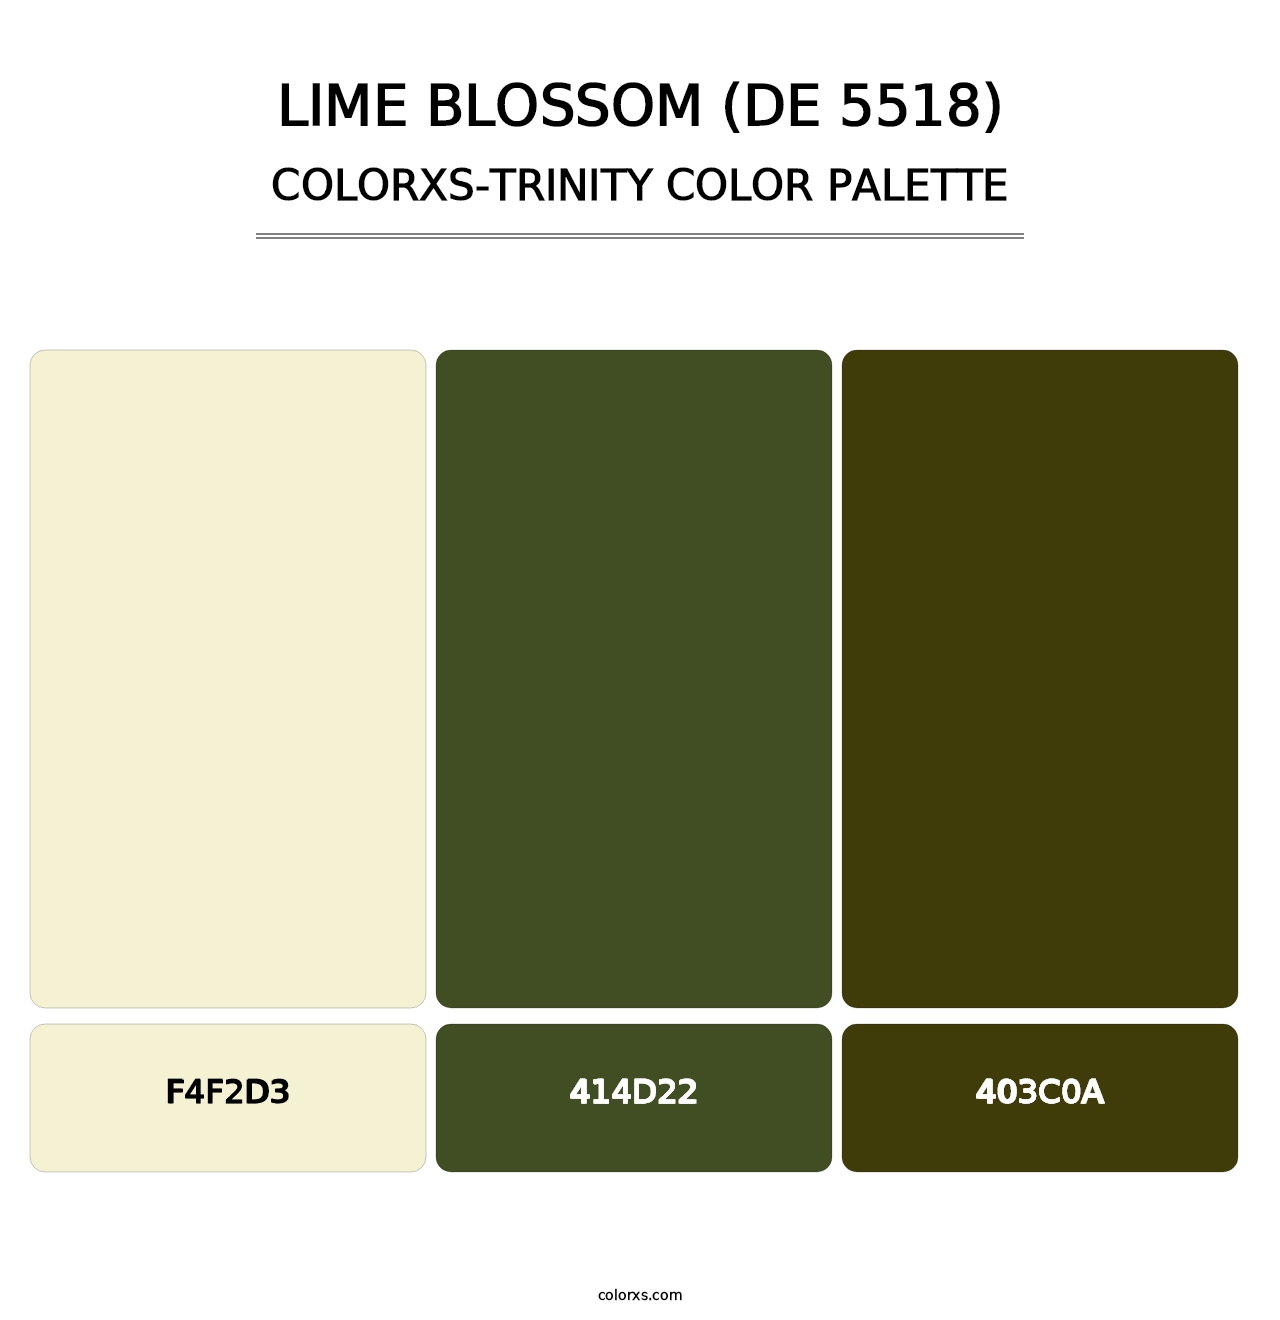 Lime Blossom (DE 5518) - Colorxs Trinity Palette